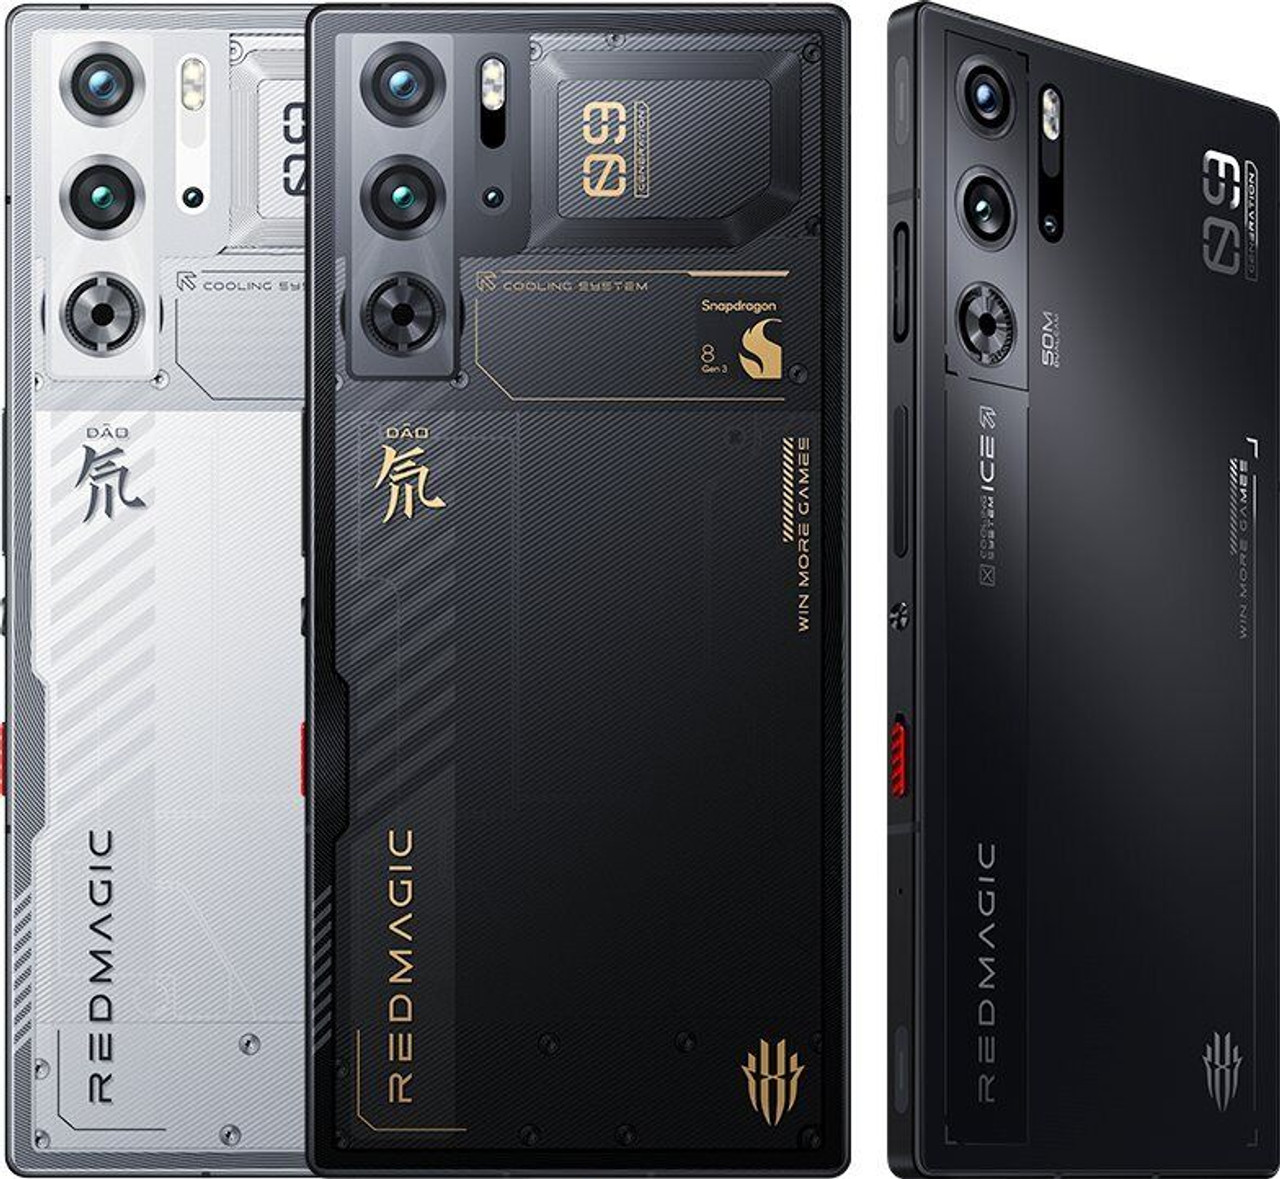 Smartphone Redmagic 9 Pro 12 Go de RAM + 256 Go de ROM Version